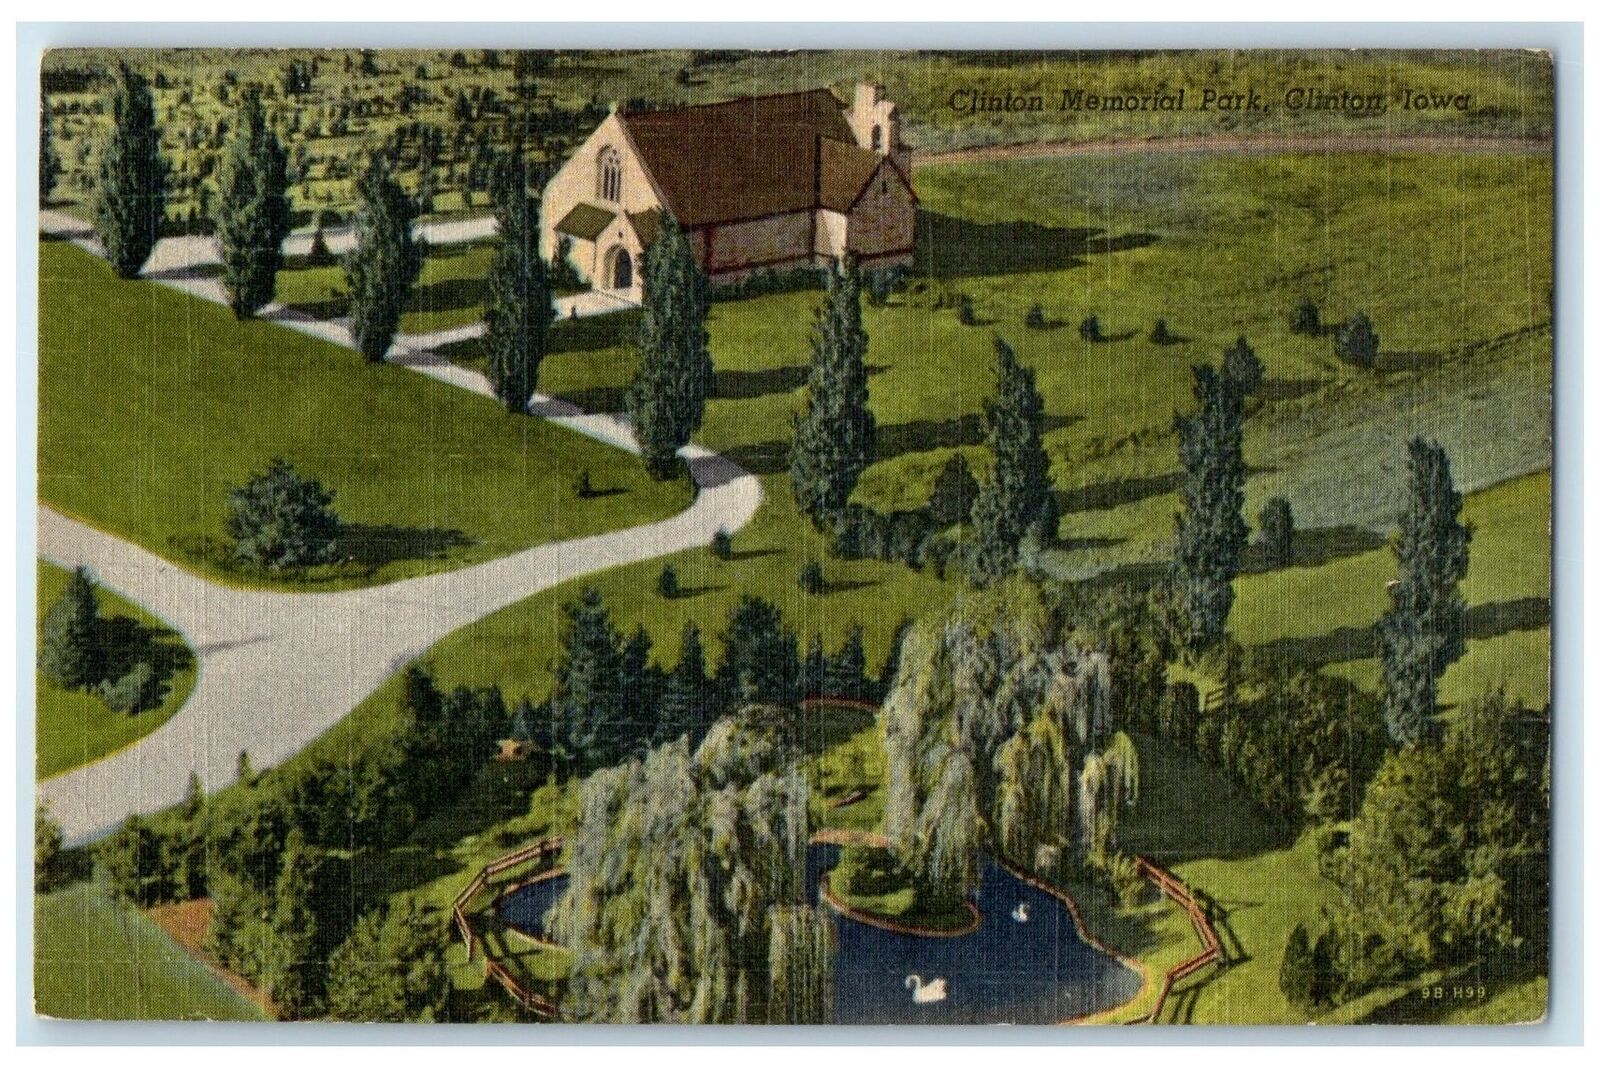 c1940's Aerial View Of Clinton Memorial Park Clinton Iowa IA Unposted Postcard